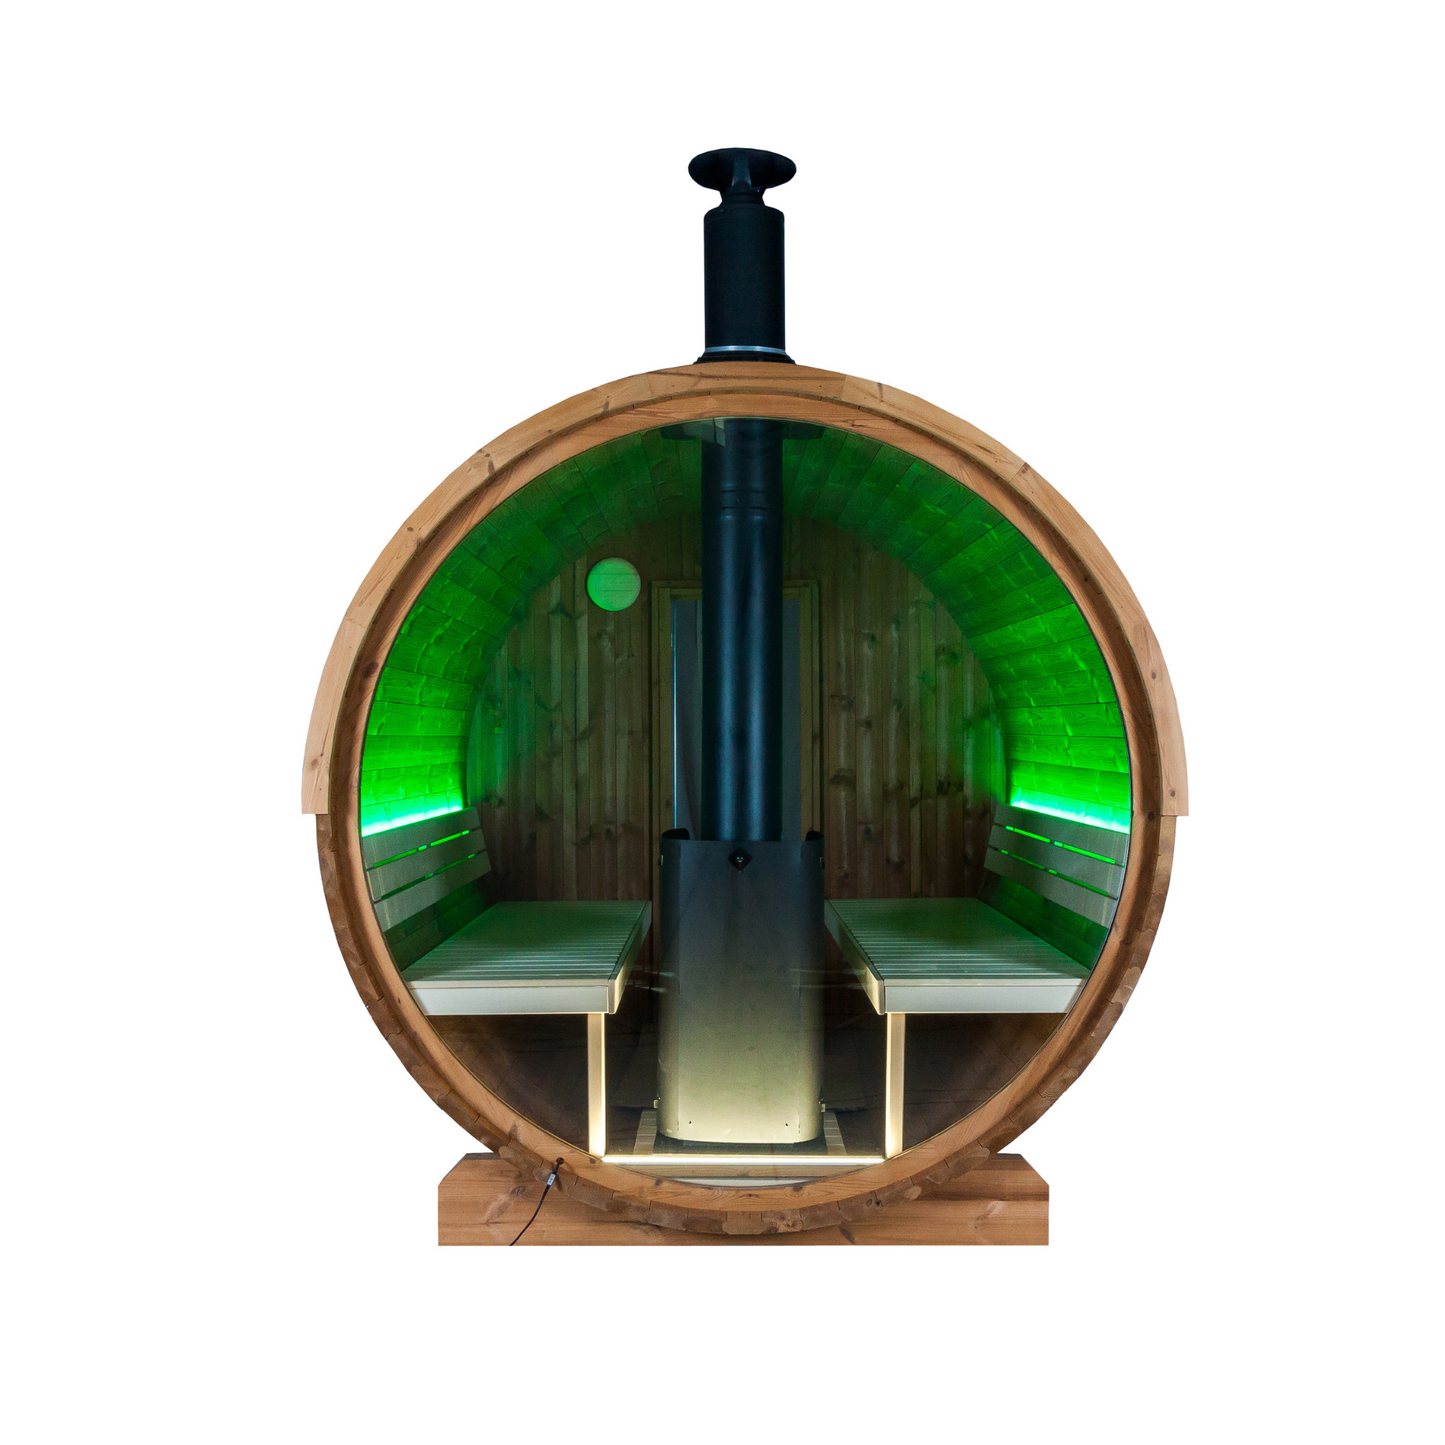 Barrel sauna -  Thermo hout -Achterkant in volledig glas - met portaal